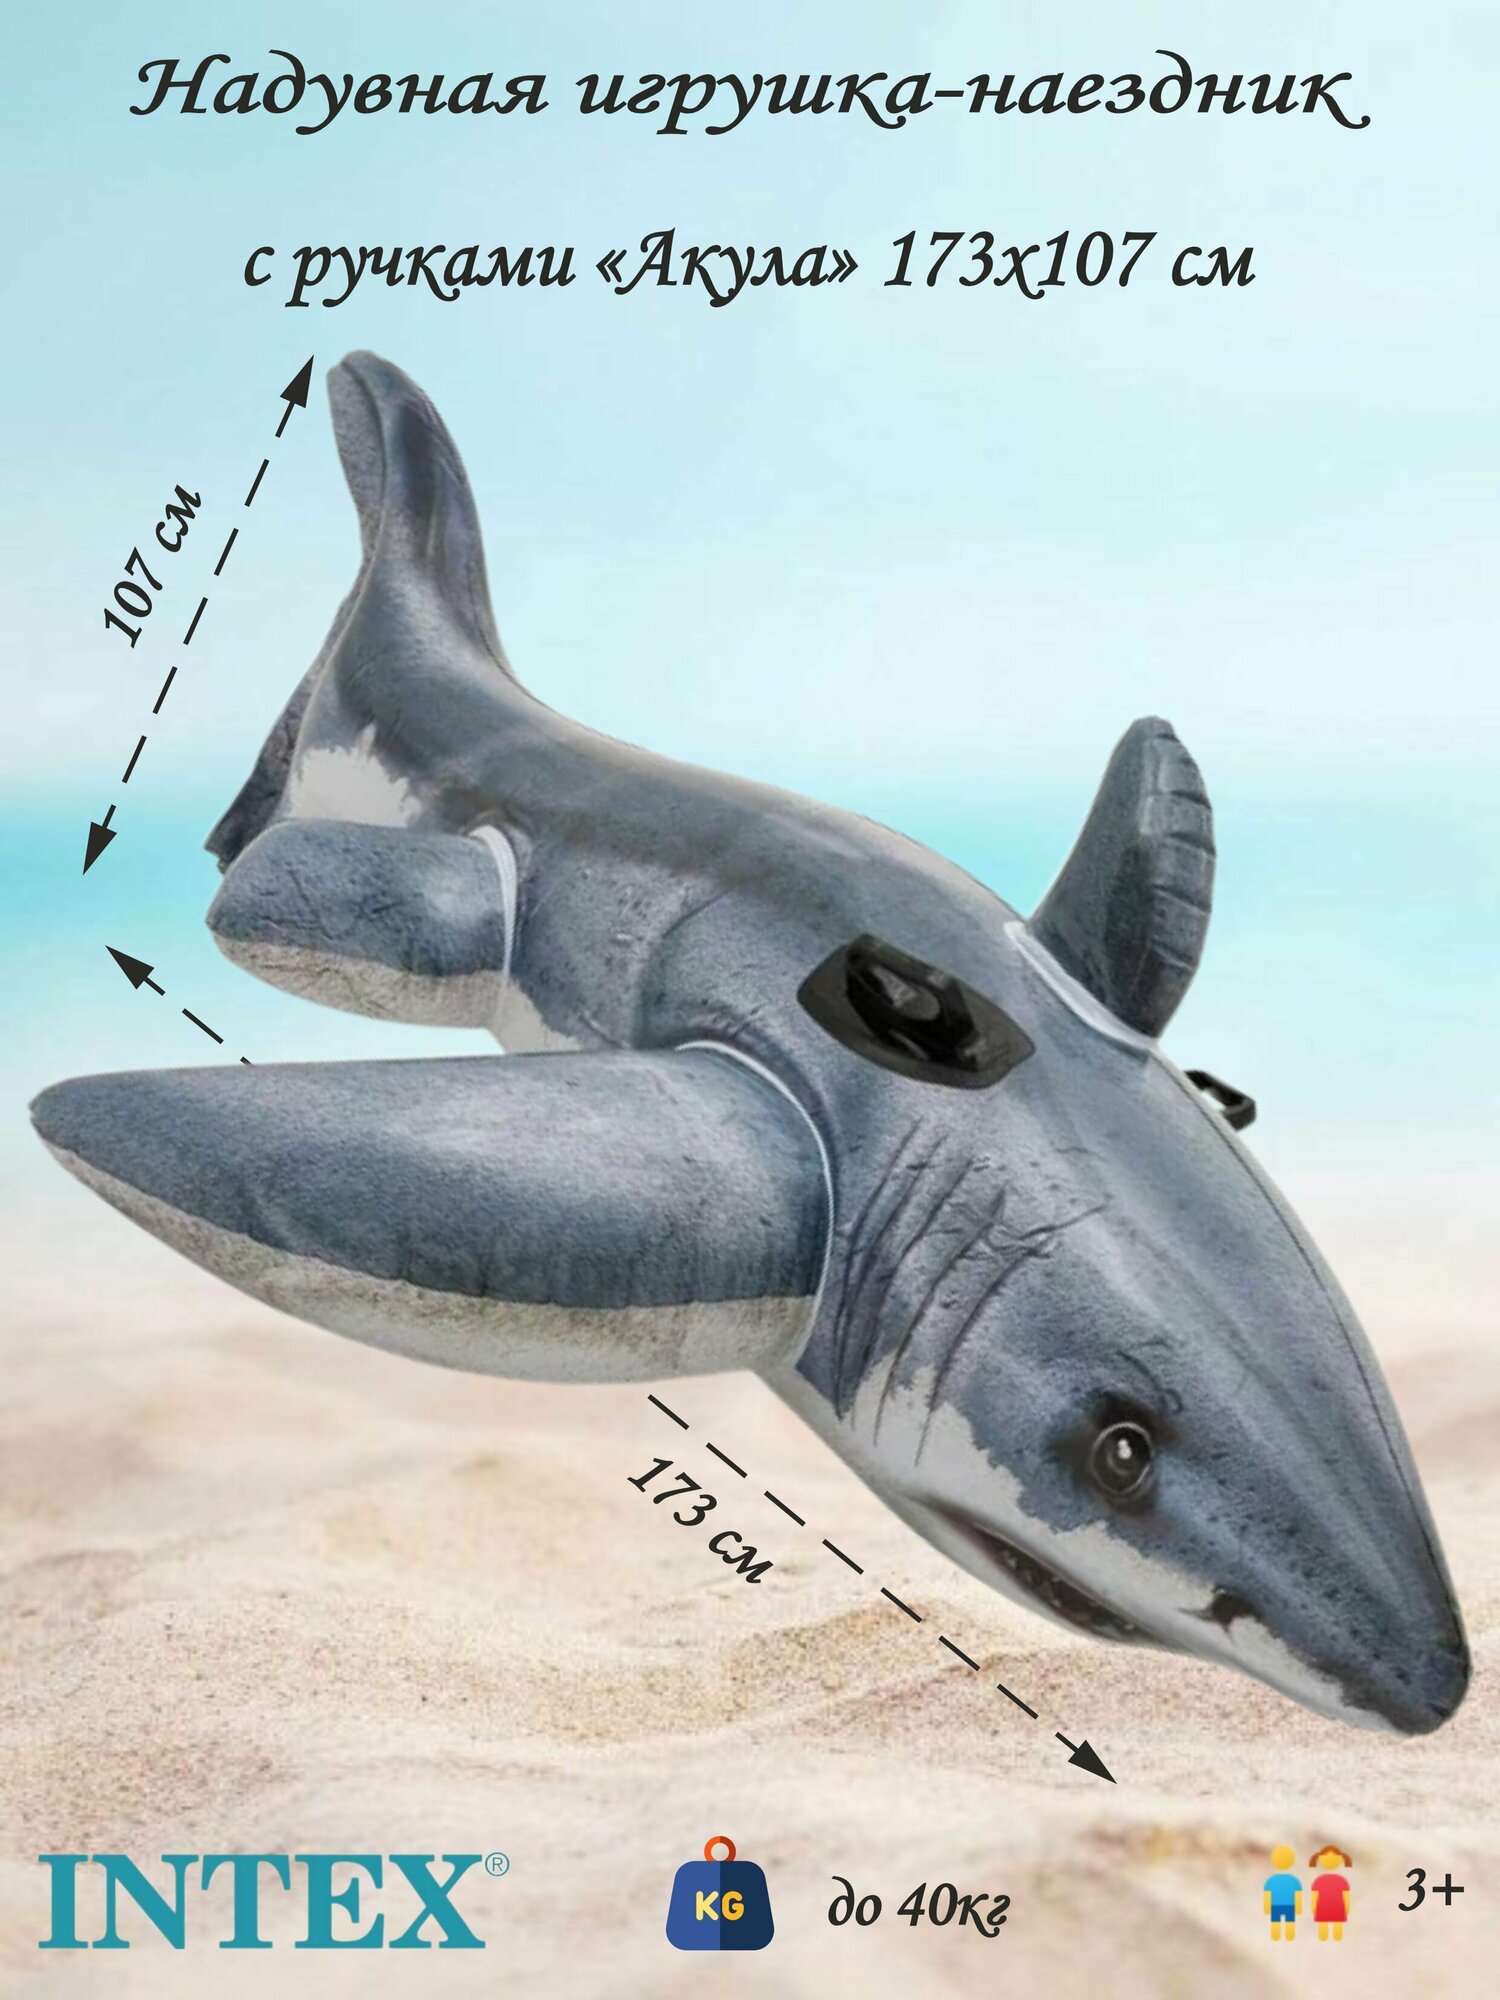 Надувная игрушка-наездник "Акула" 173х107